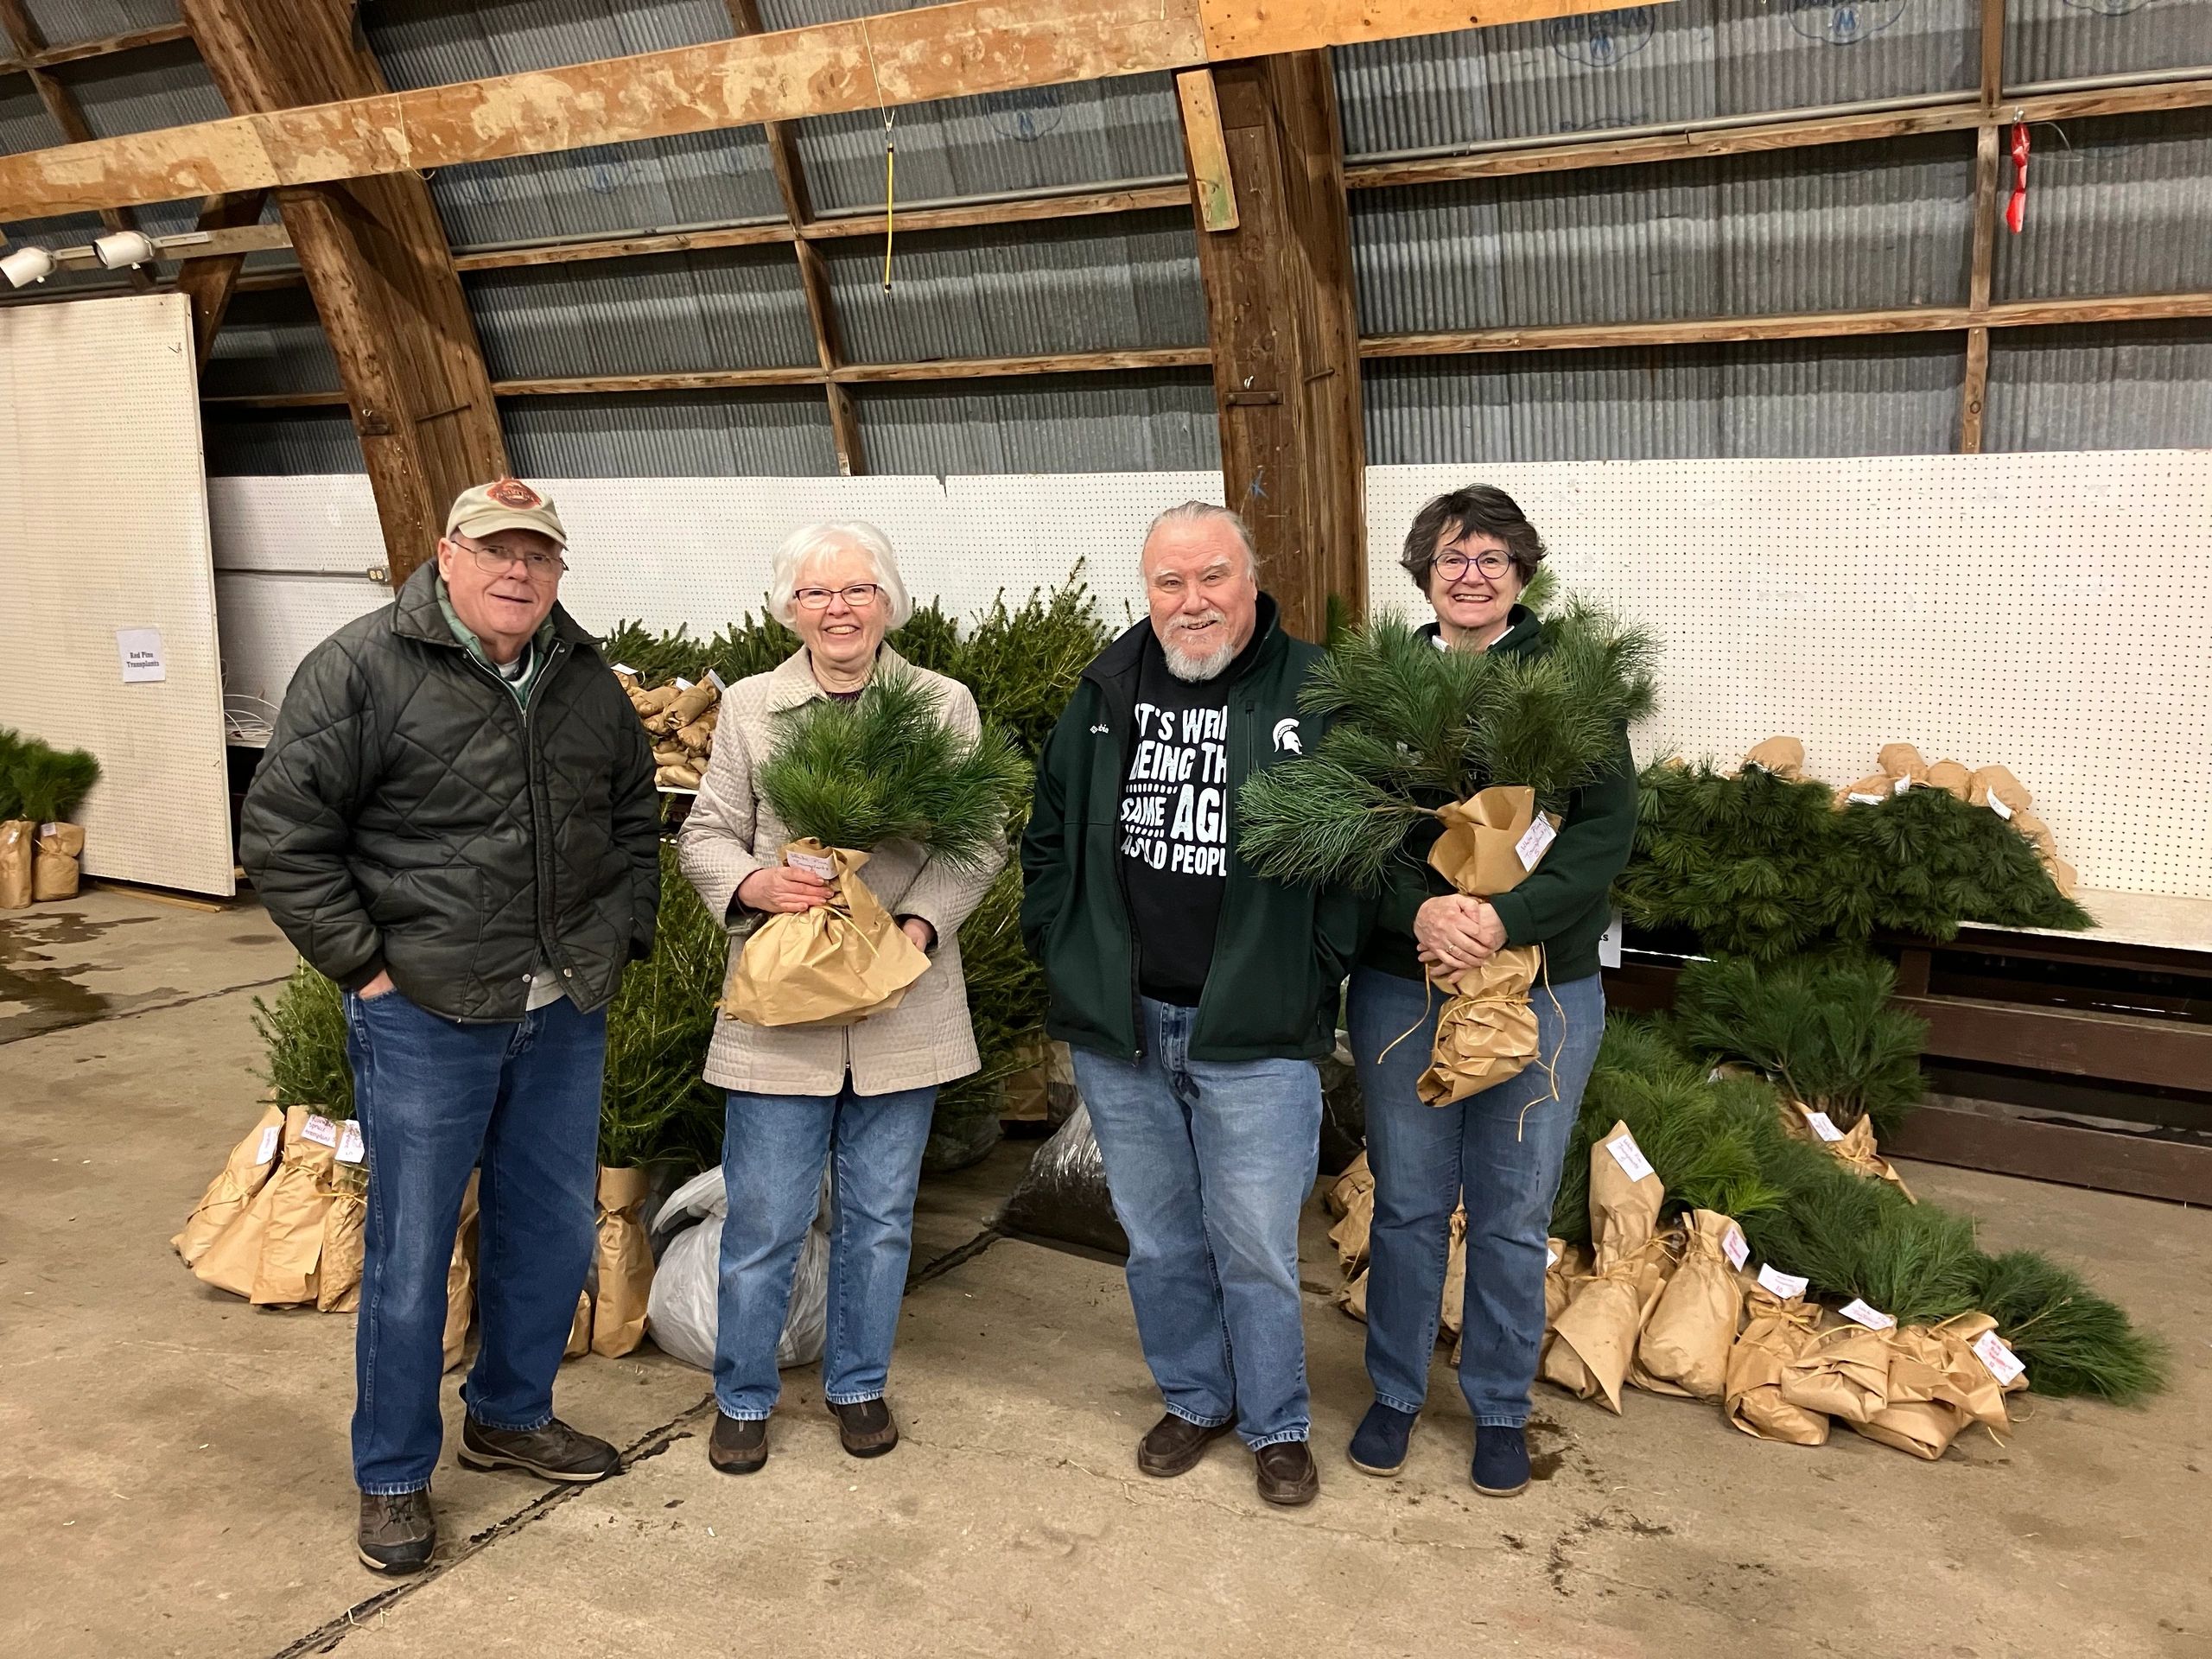 Loyal Clinton County Dems Ron & Johanna Balzer and Lois & John Husby helped to wrap trees for Clinto